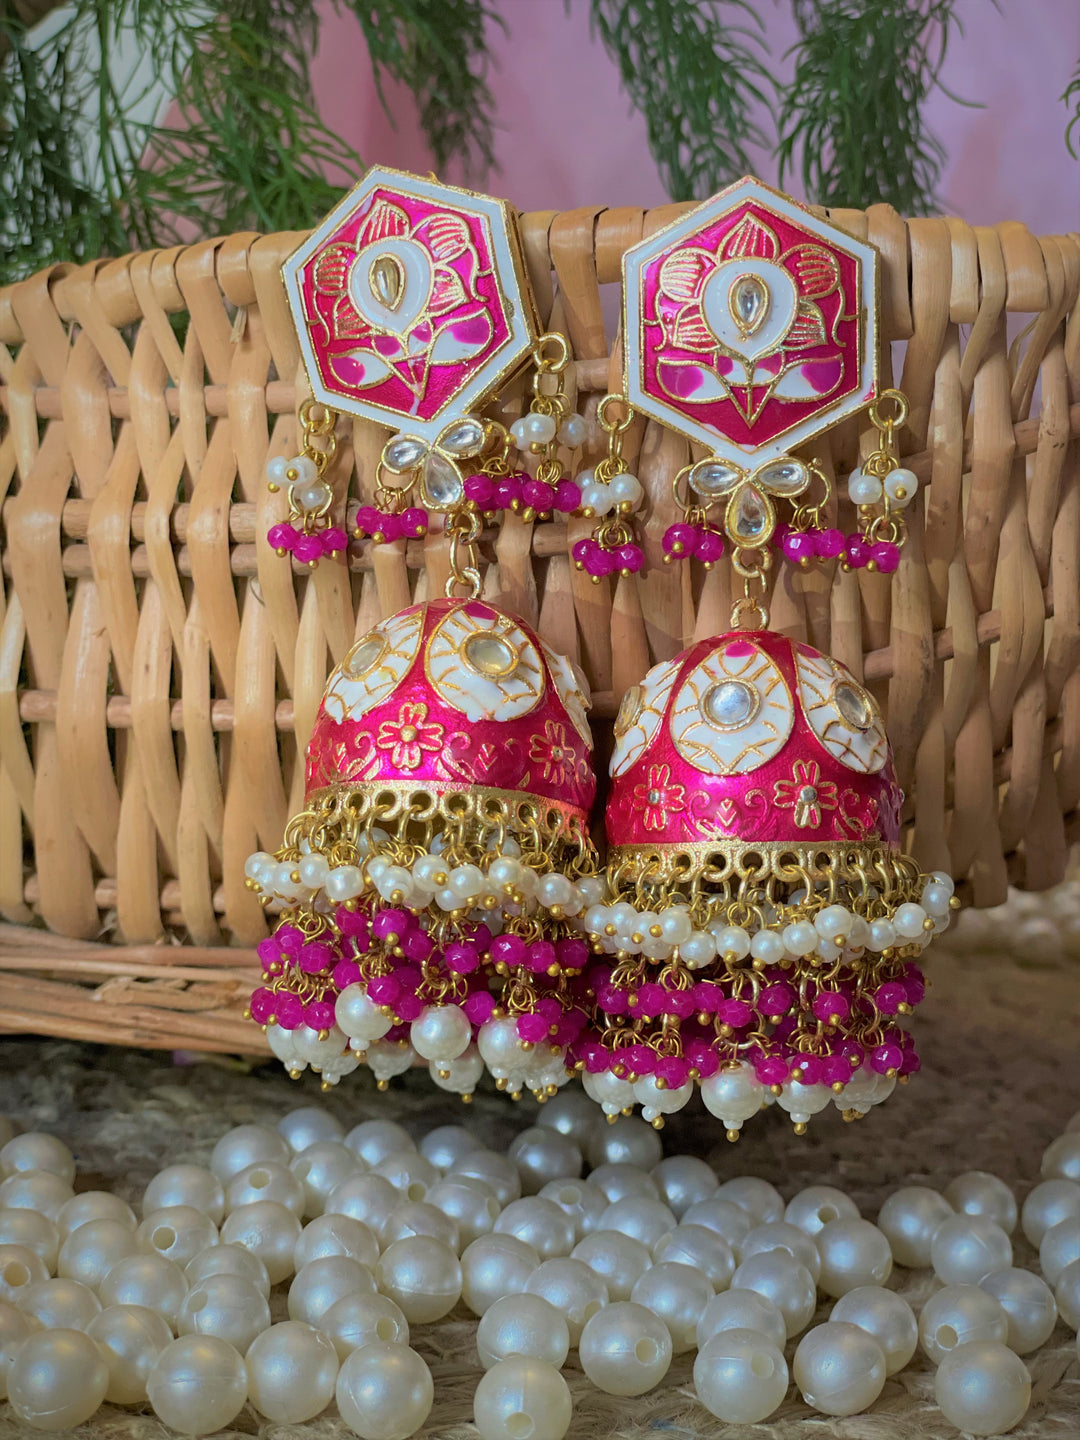 Gulabi jaipur hand-painted earring